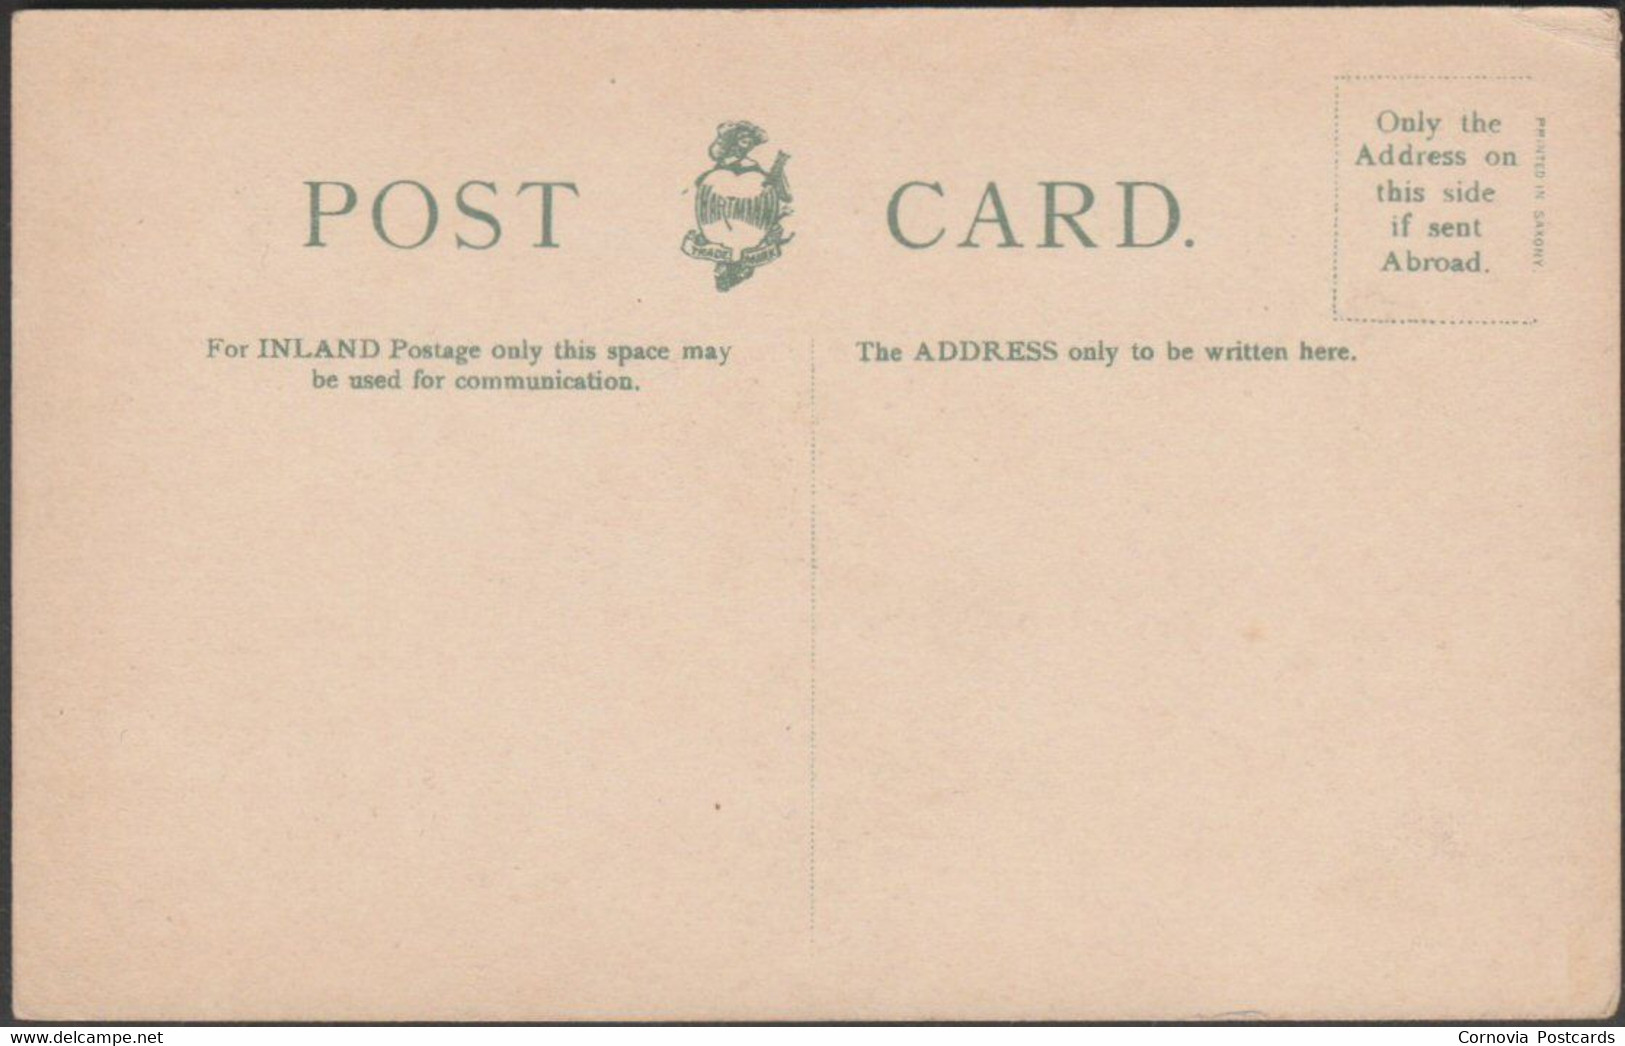 Tors & Town From Capstone Hill, Ilfracombe, C.1905 - Hartmann Postcard - Ilfracombe